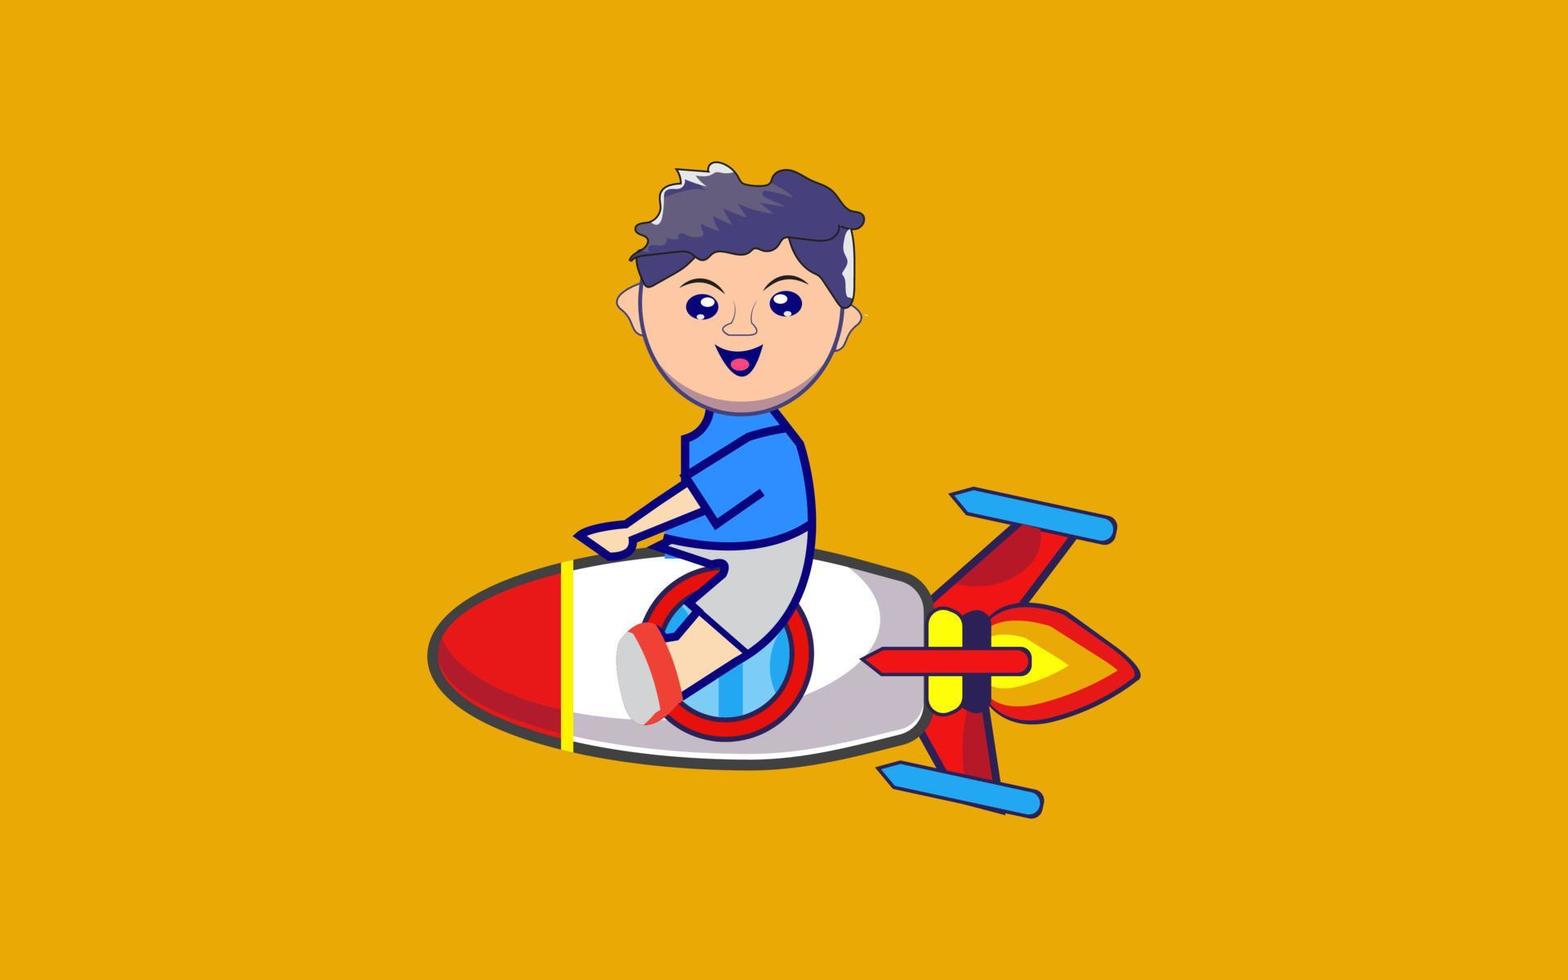 Cute astronaut lean on rocket cartoon vector icon illustration